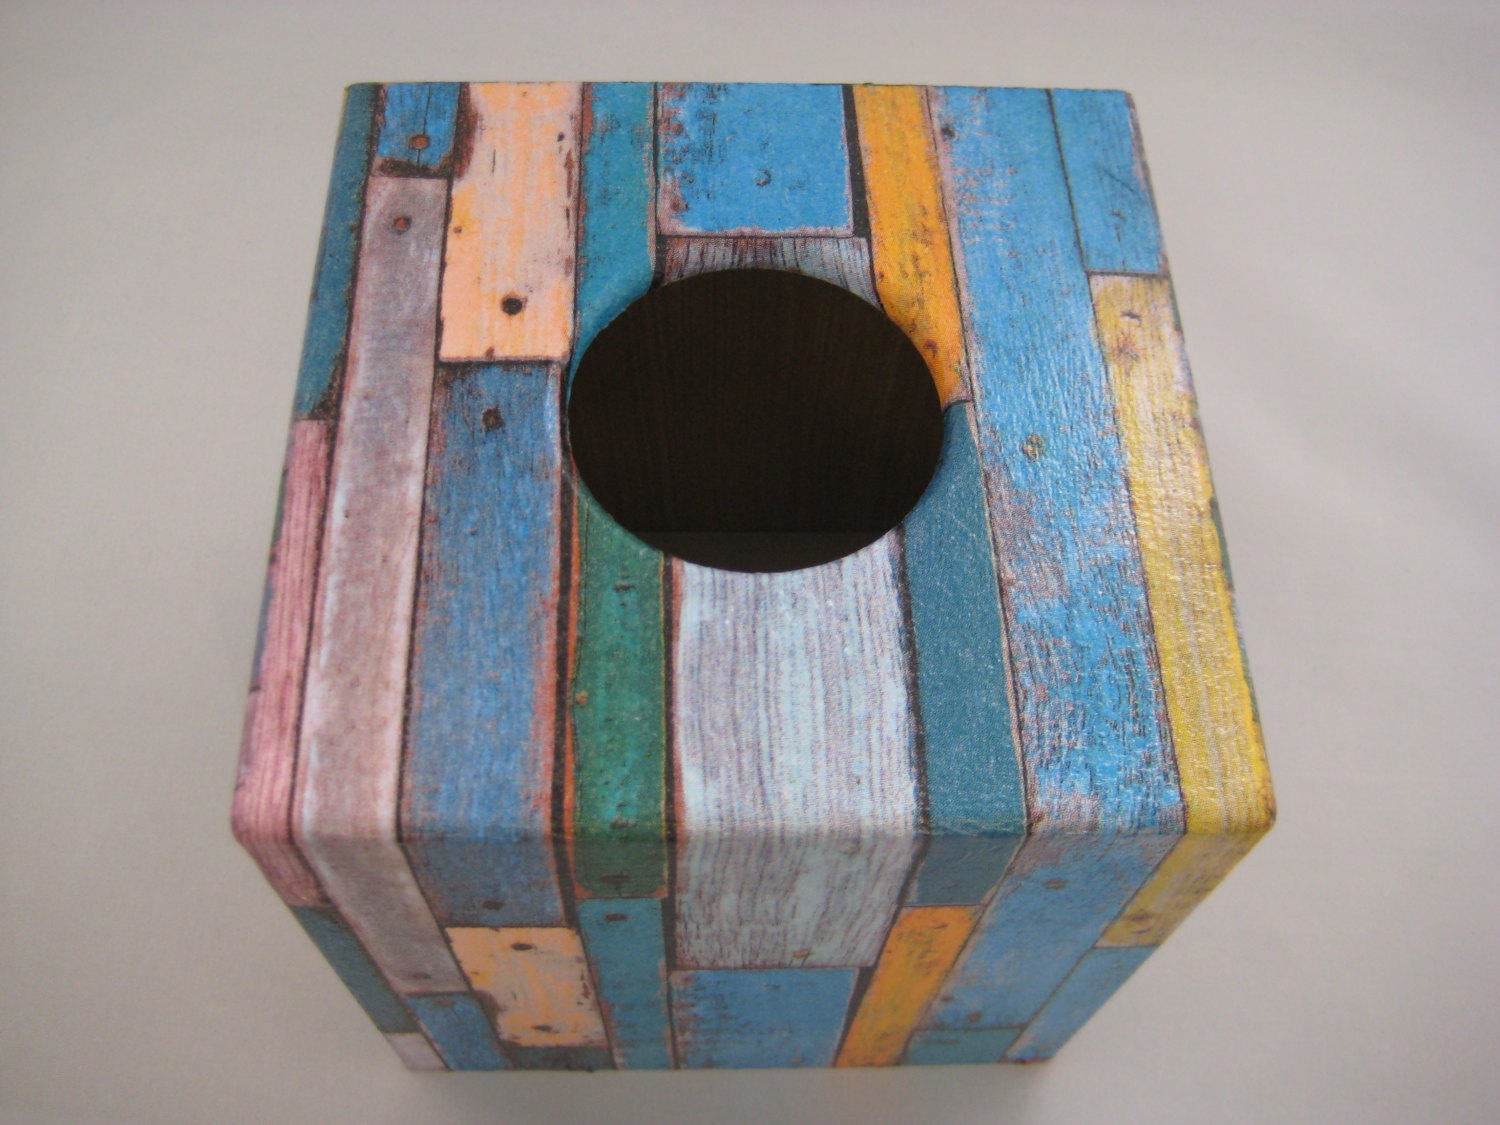 Vintage Blue Wood Tissue Box Cover - Handmade